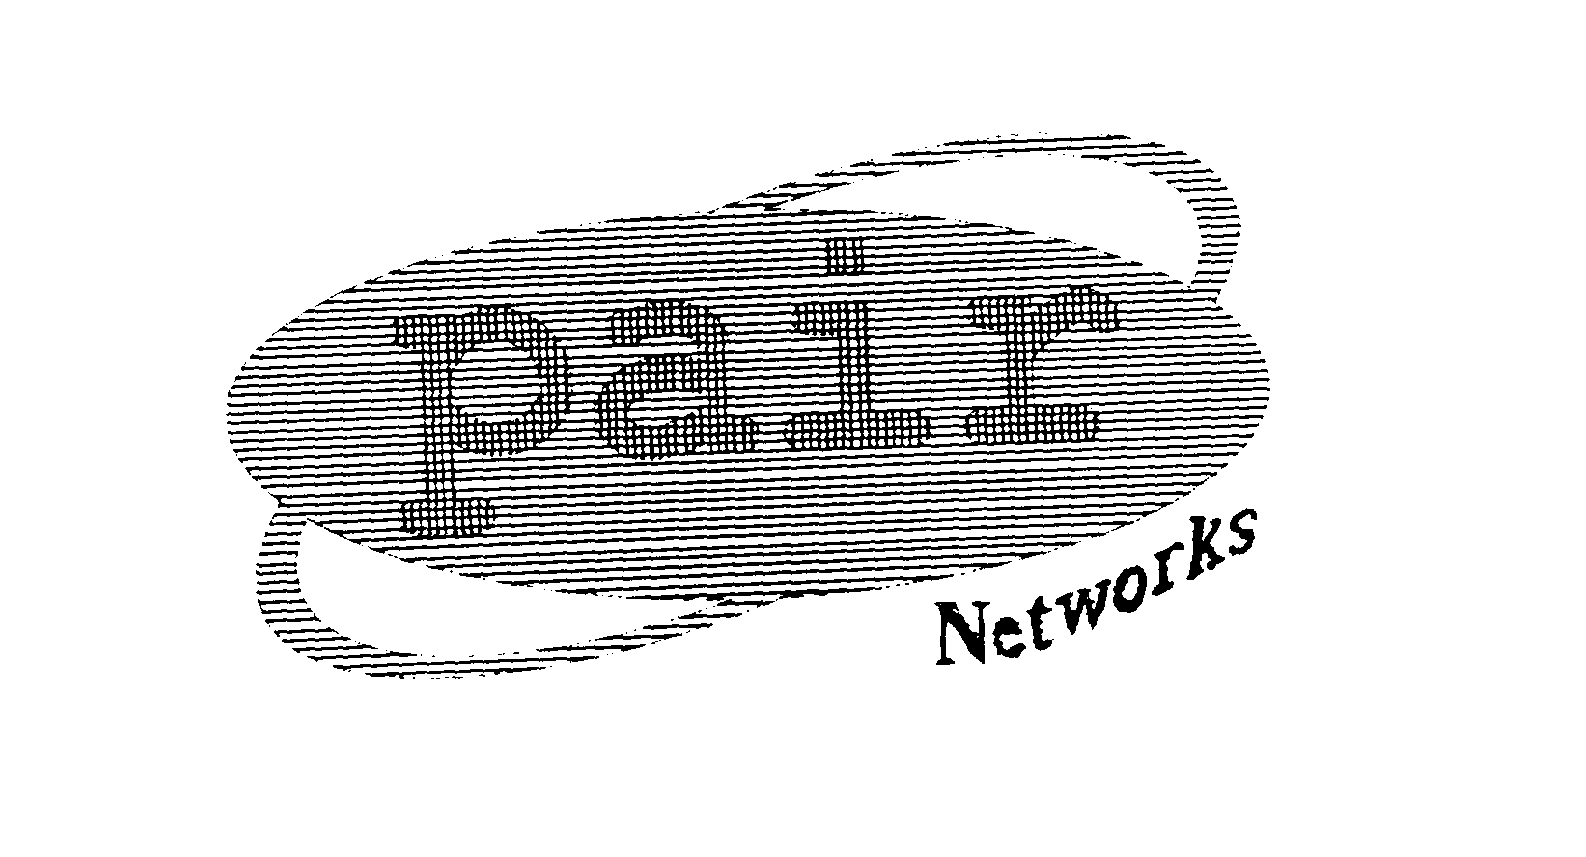  PAIR NETWORKS